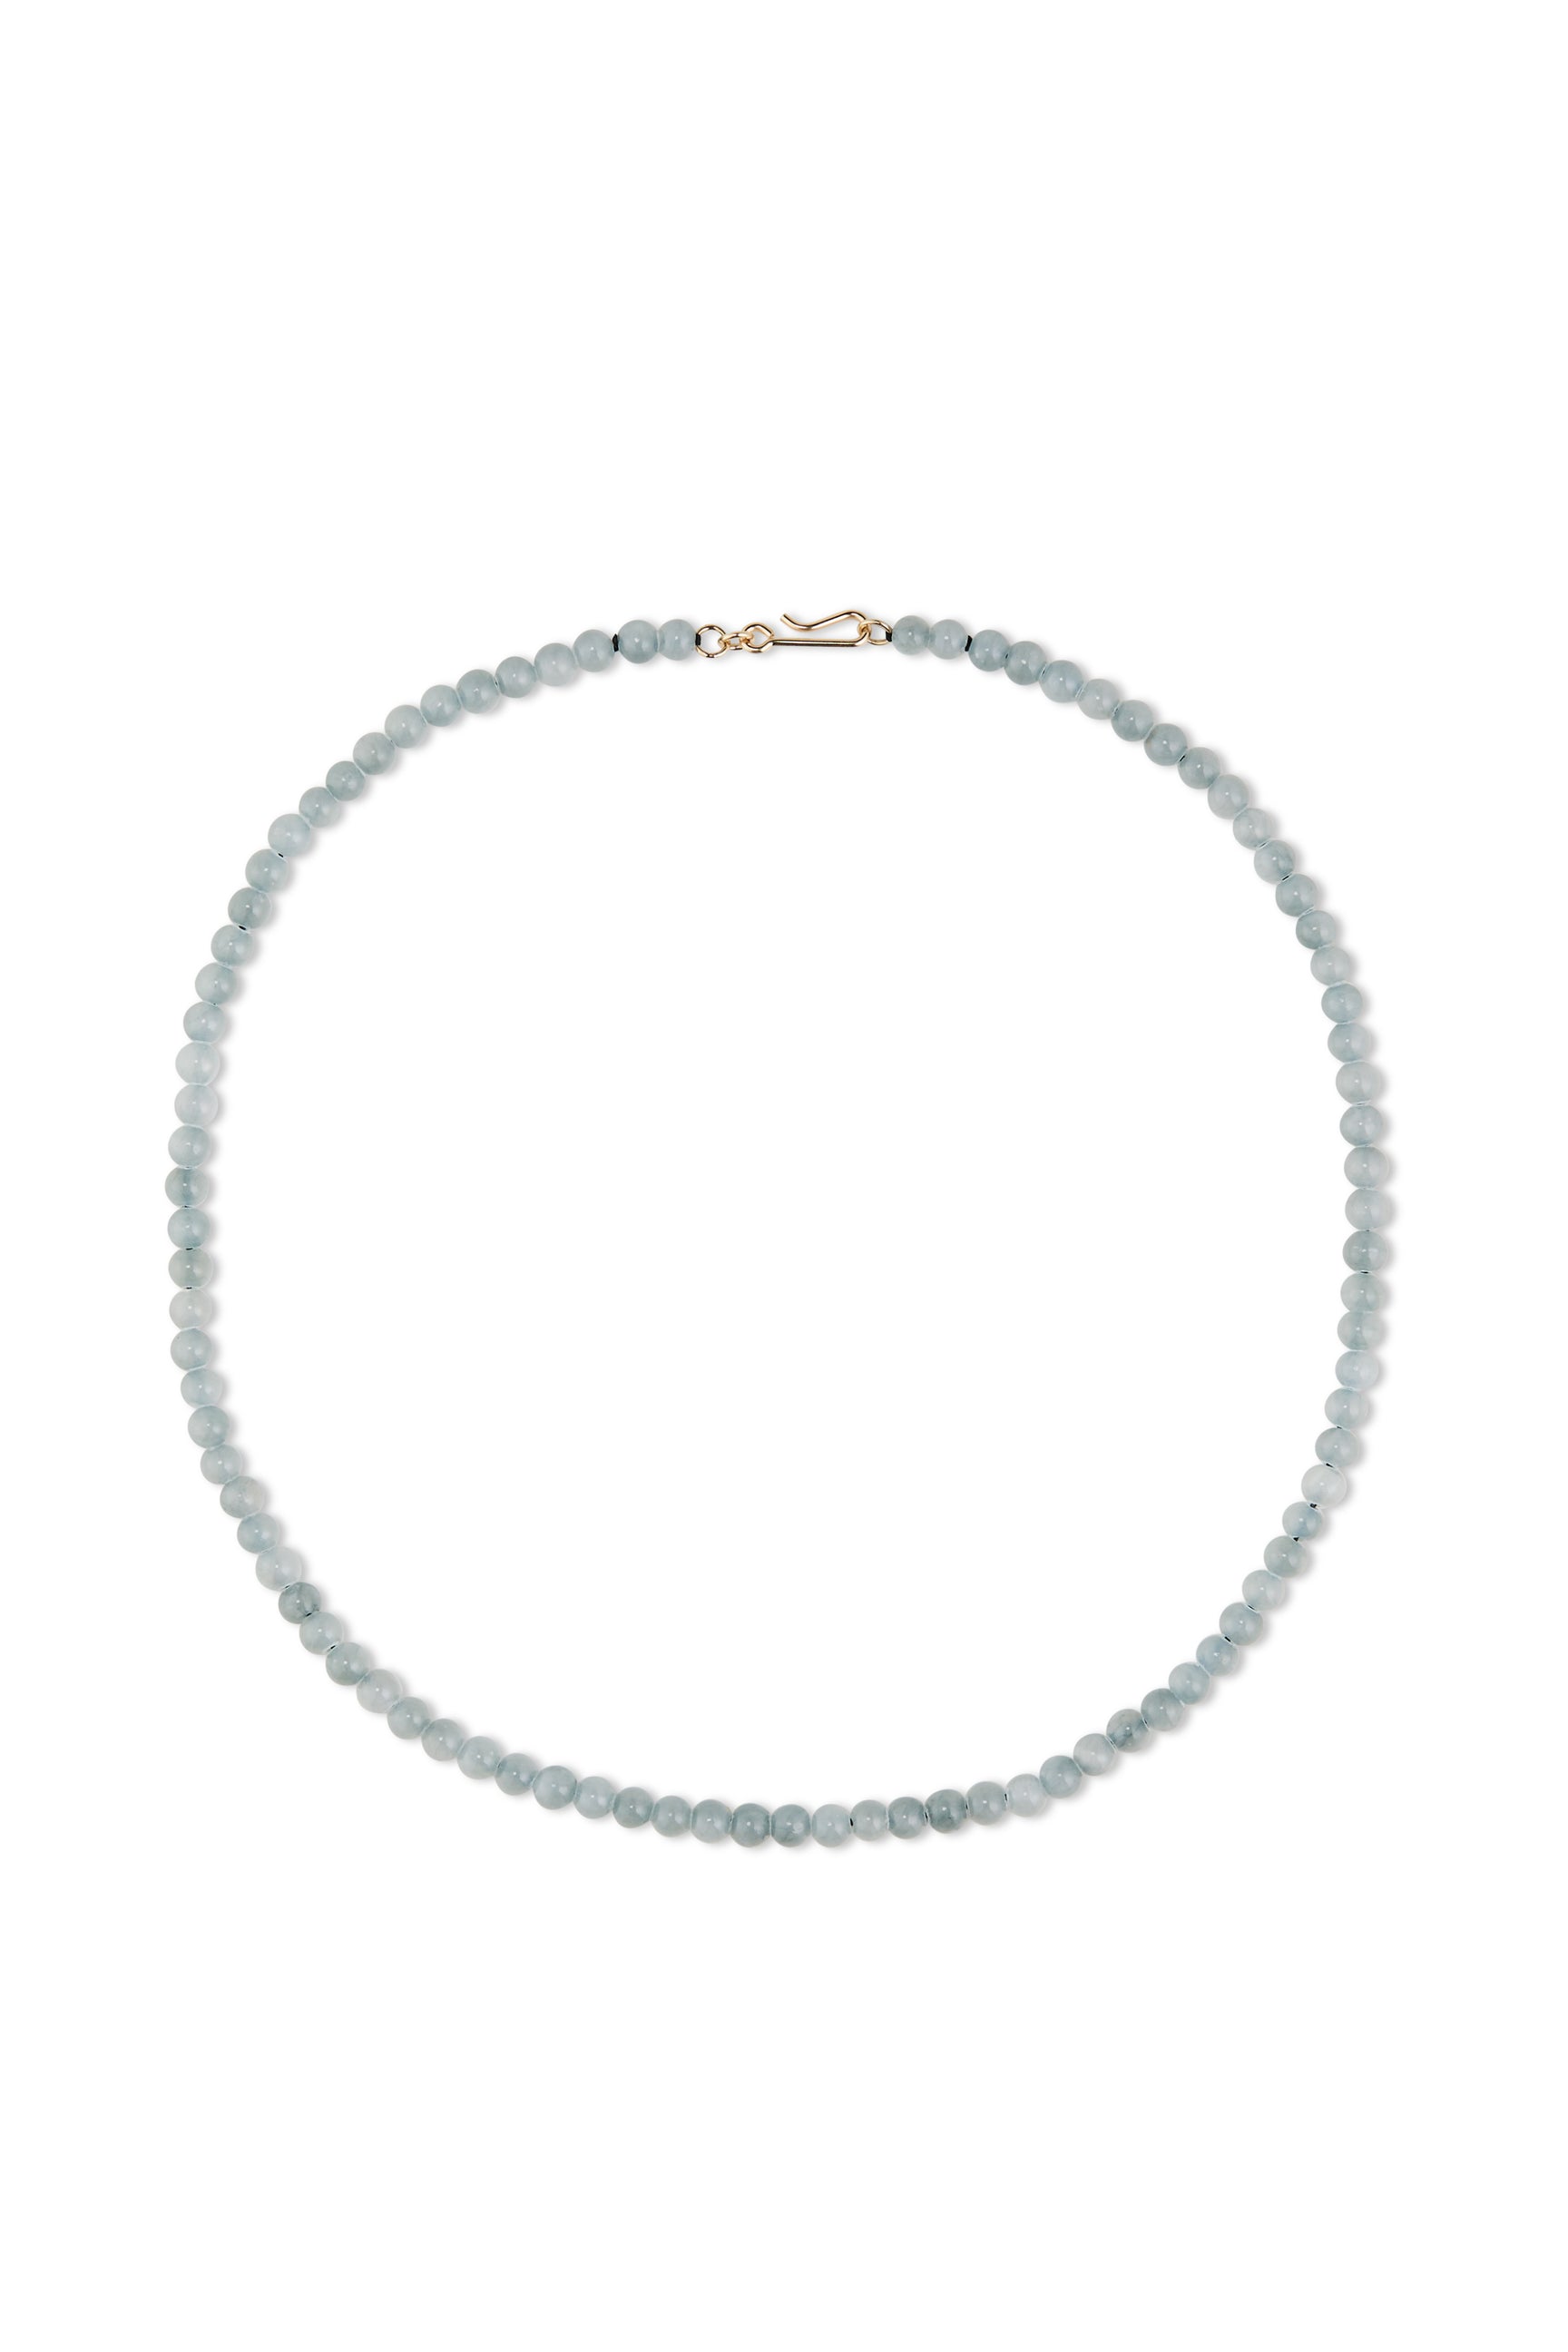 Petite Boule Necklace Grey Mashan Jade